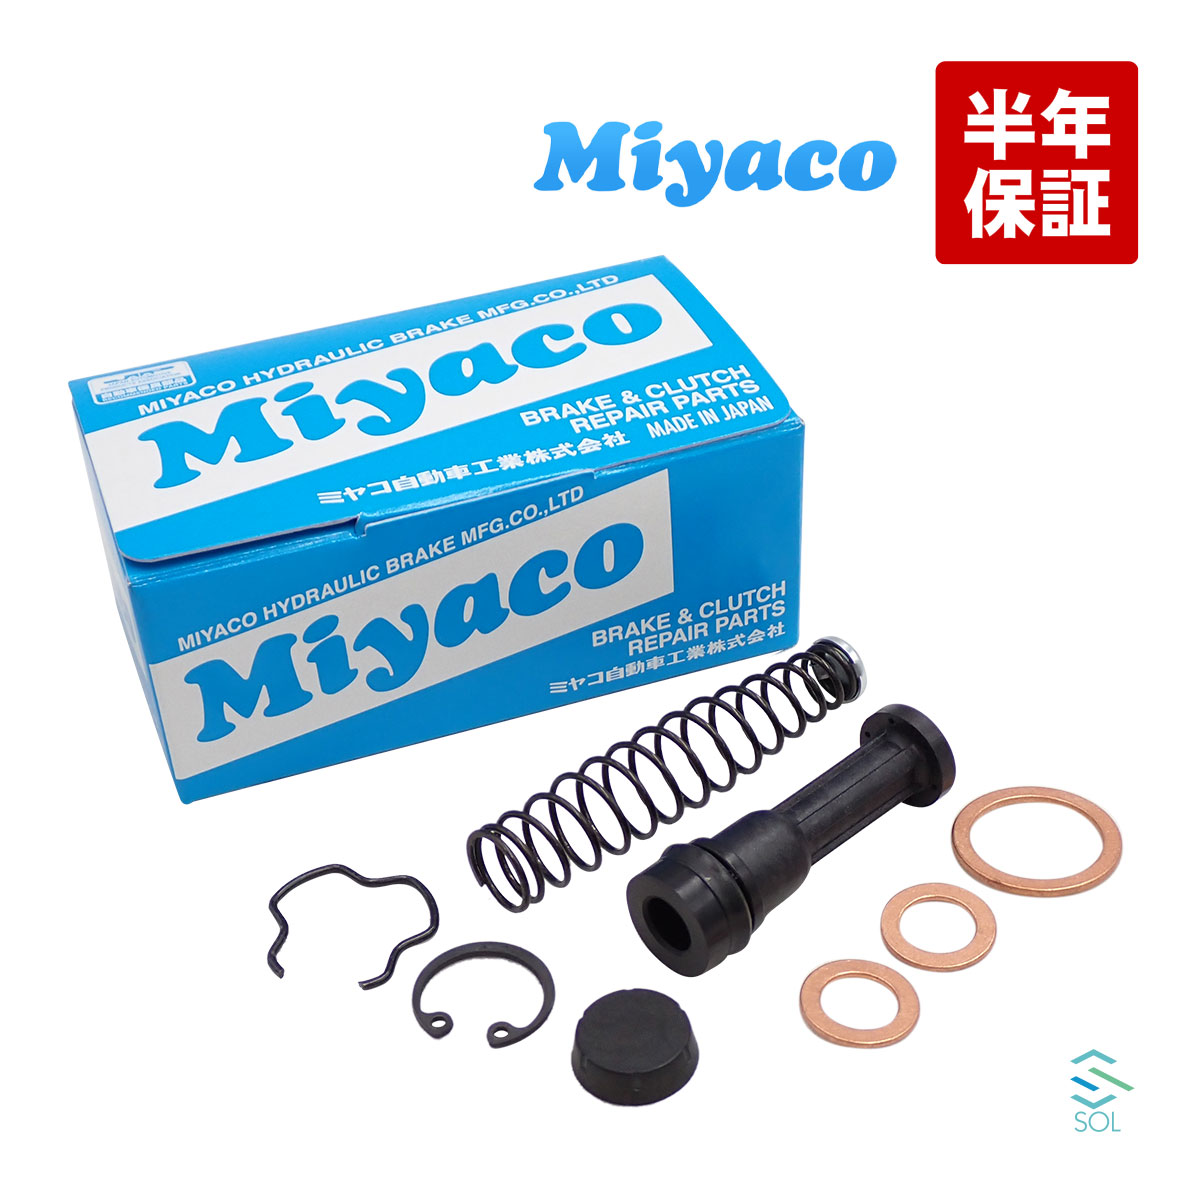 Miyacomiyako clutch master repair kit MK-0111miyako automobile Capella Cosmo Brawny Bongo Eunos cargo Luce Familia 